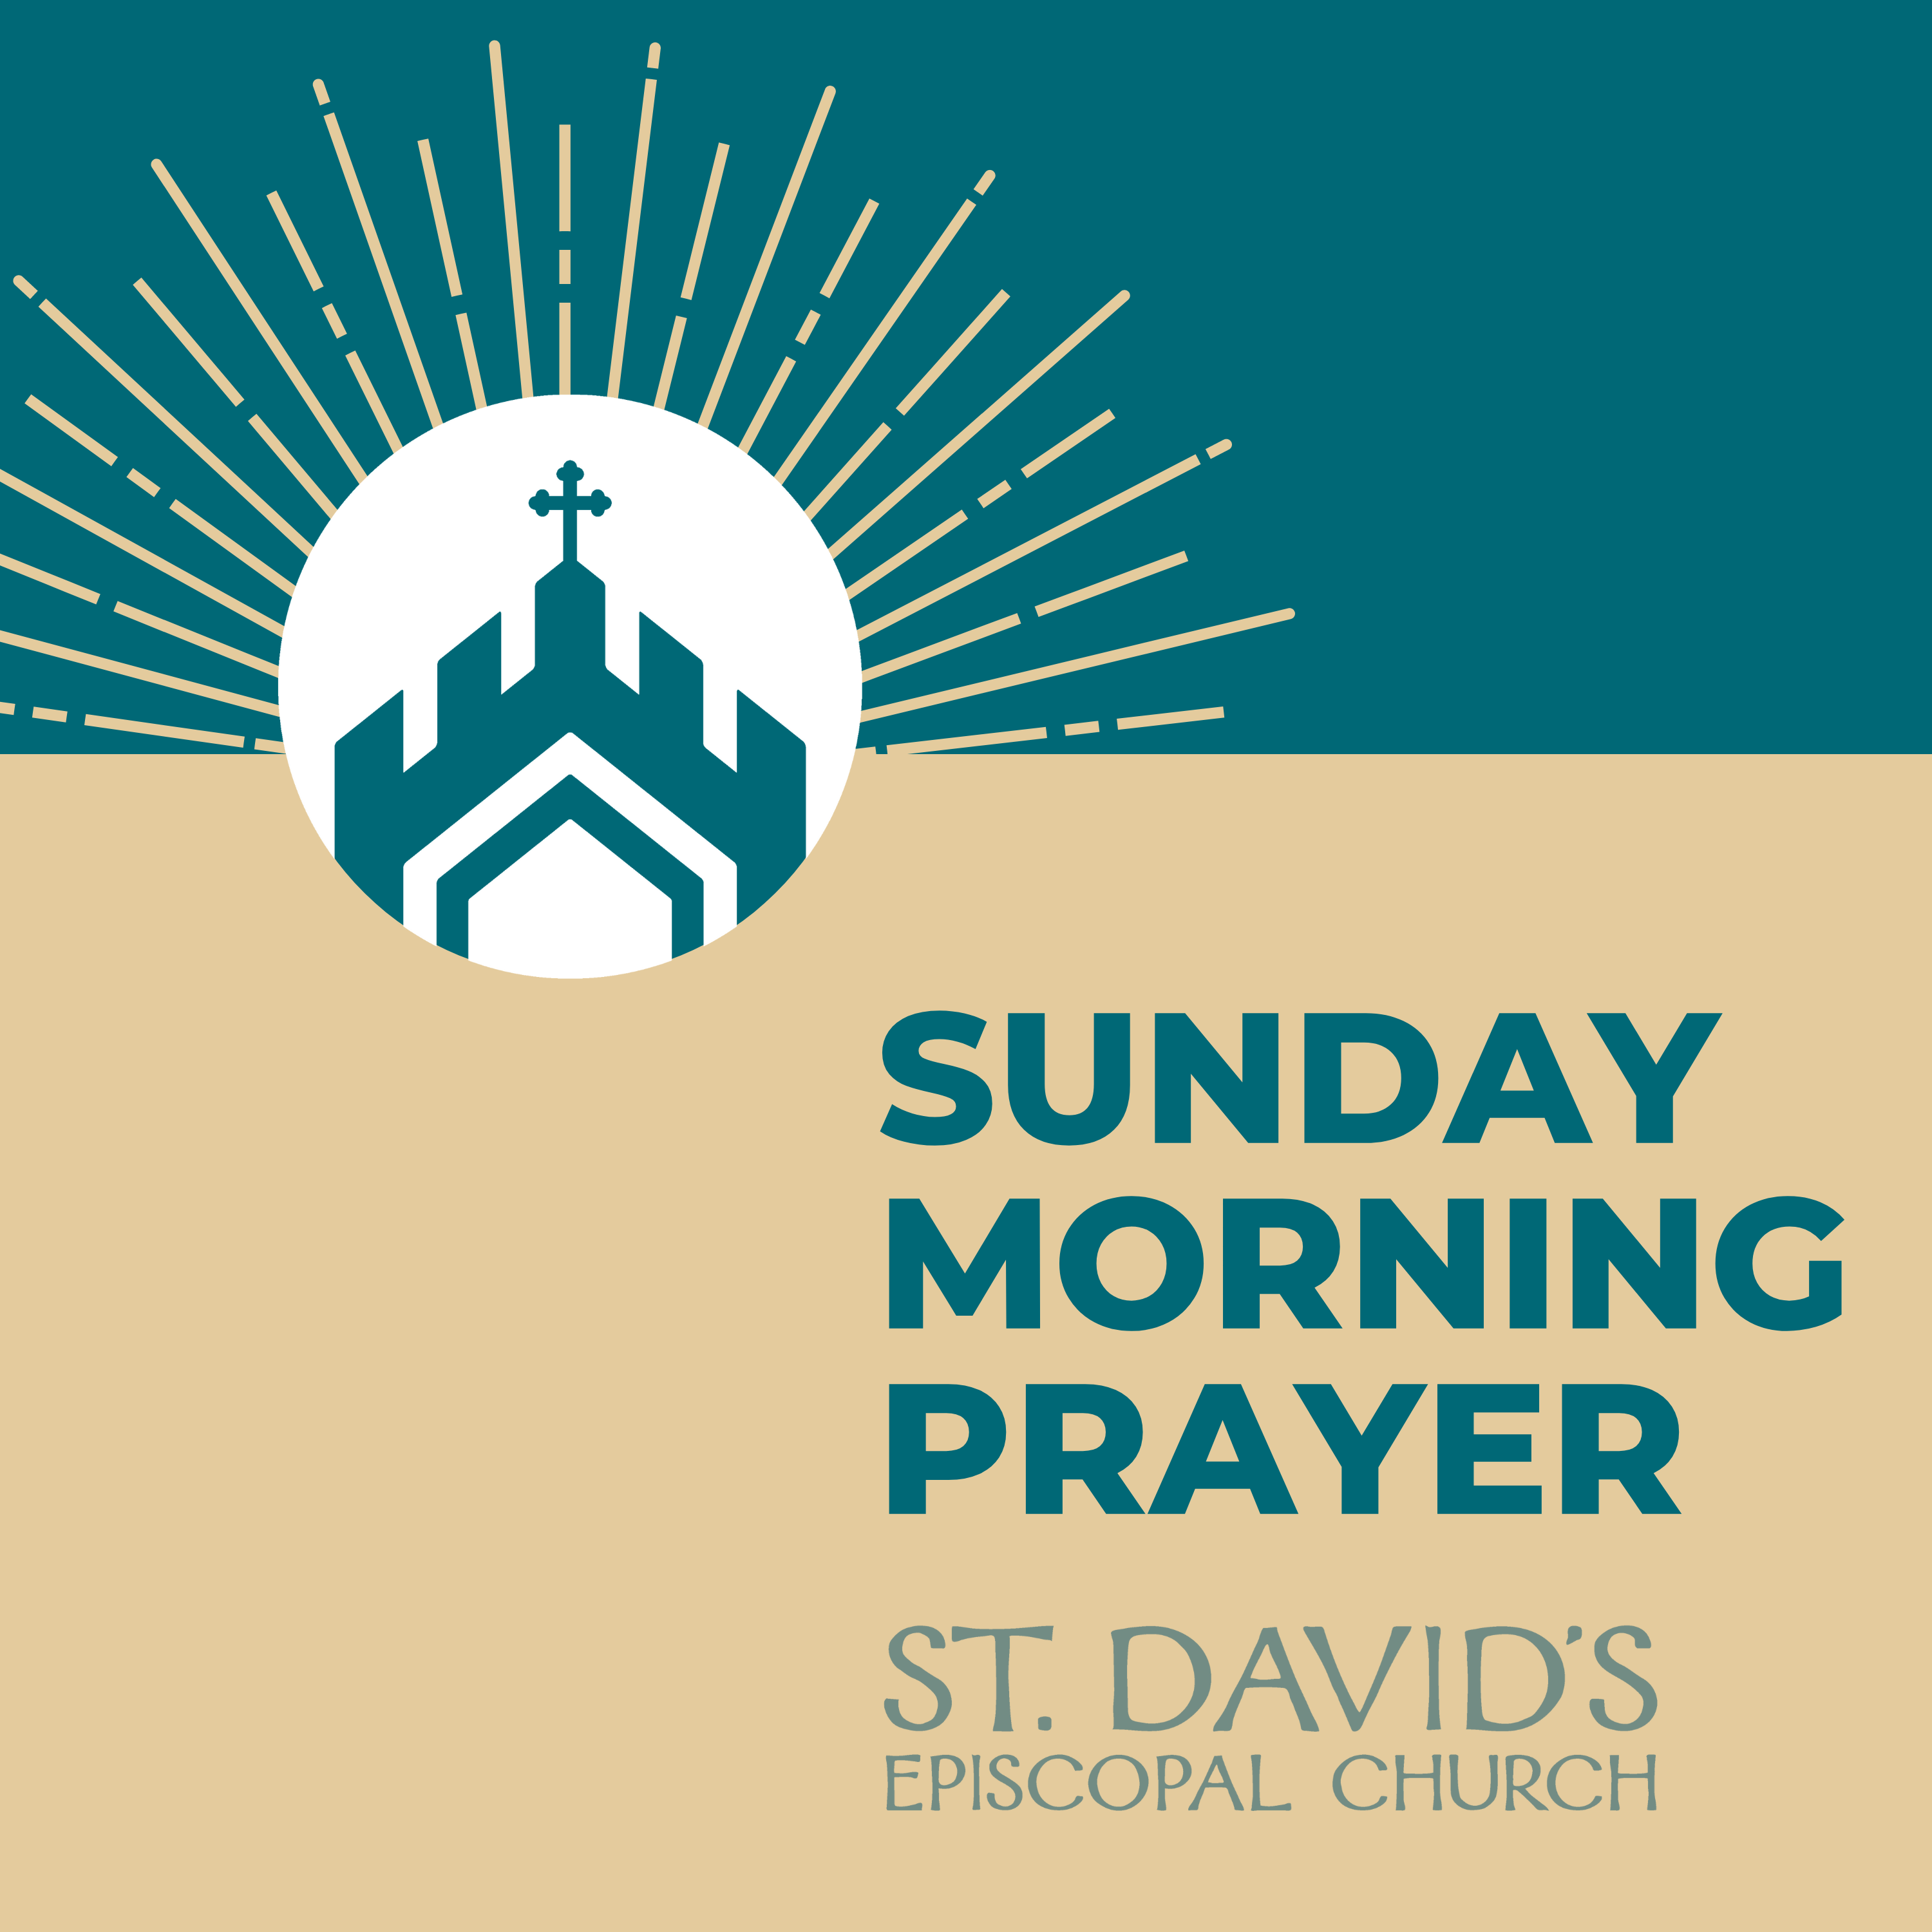 Sunday Morning Prayer: Rite Two, Year 2, 17th Sunday after Pentecost